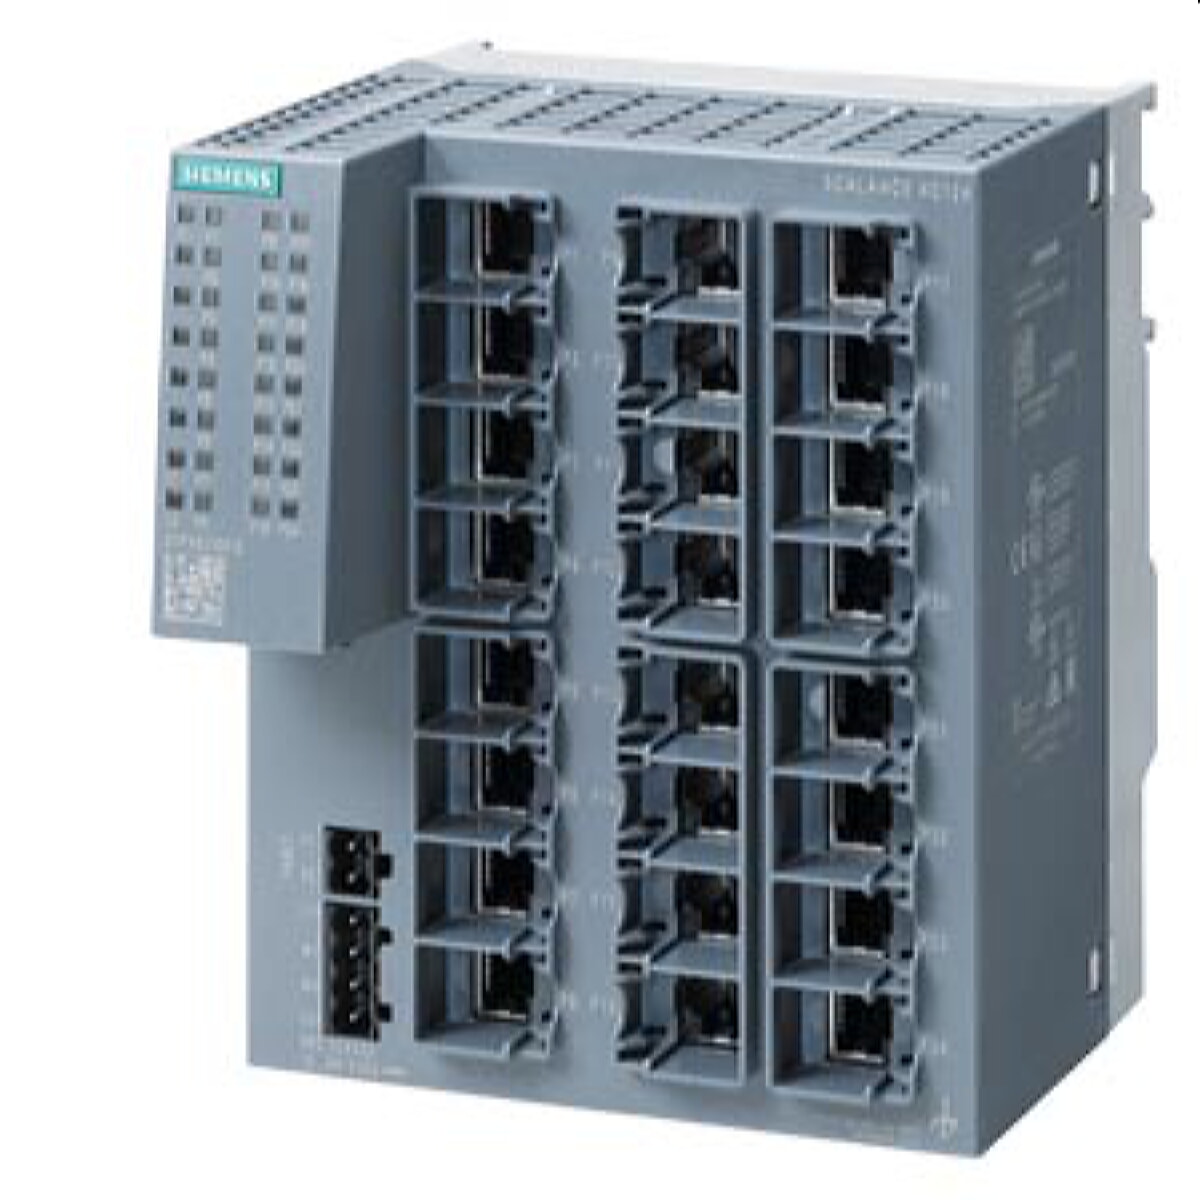 Siemens Industrial Ethernet Switch SCALANCE XC124 6GK5124-0BA00-2AC2